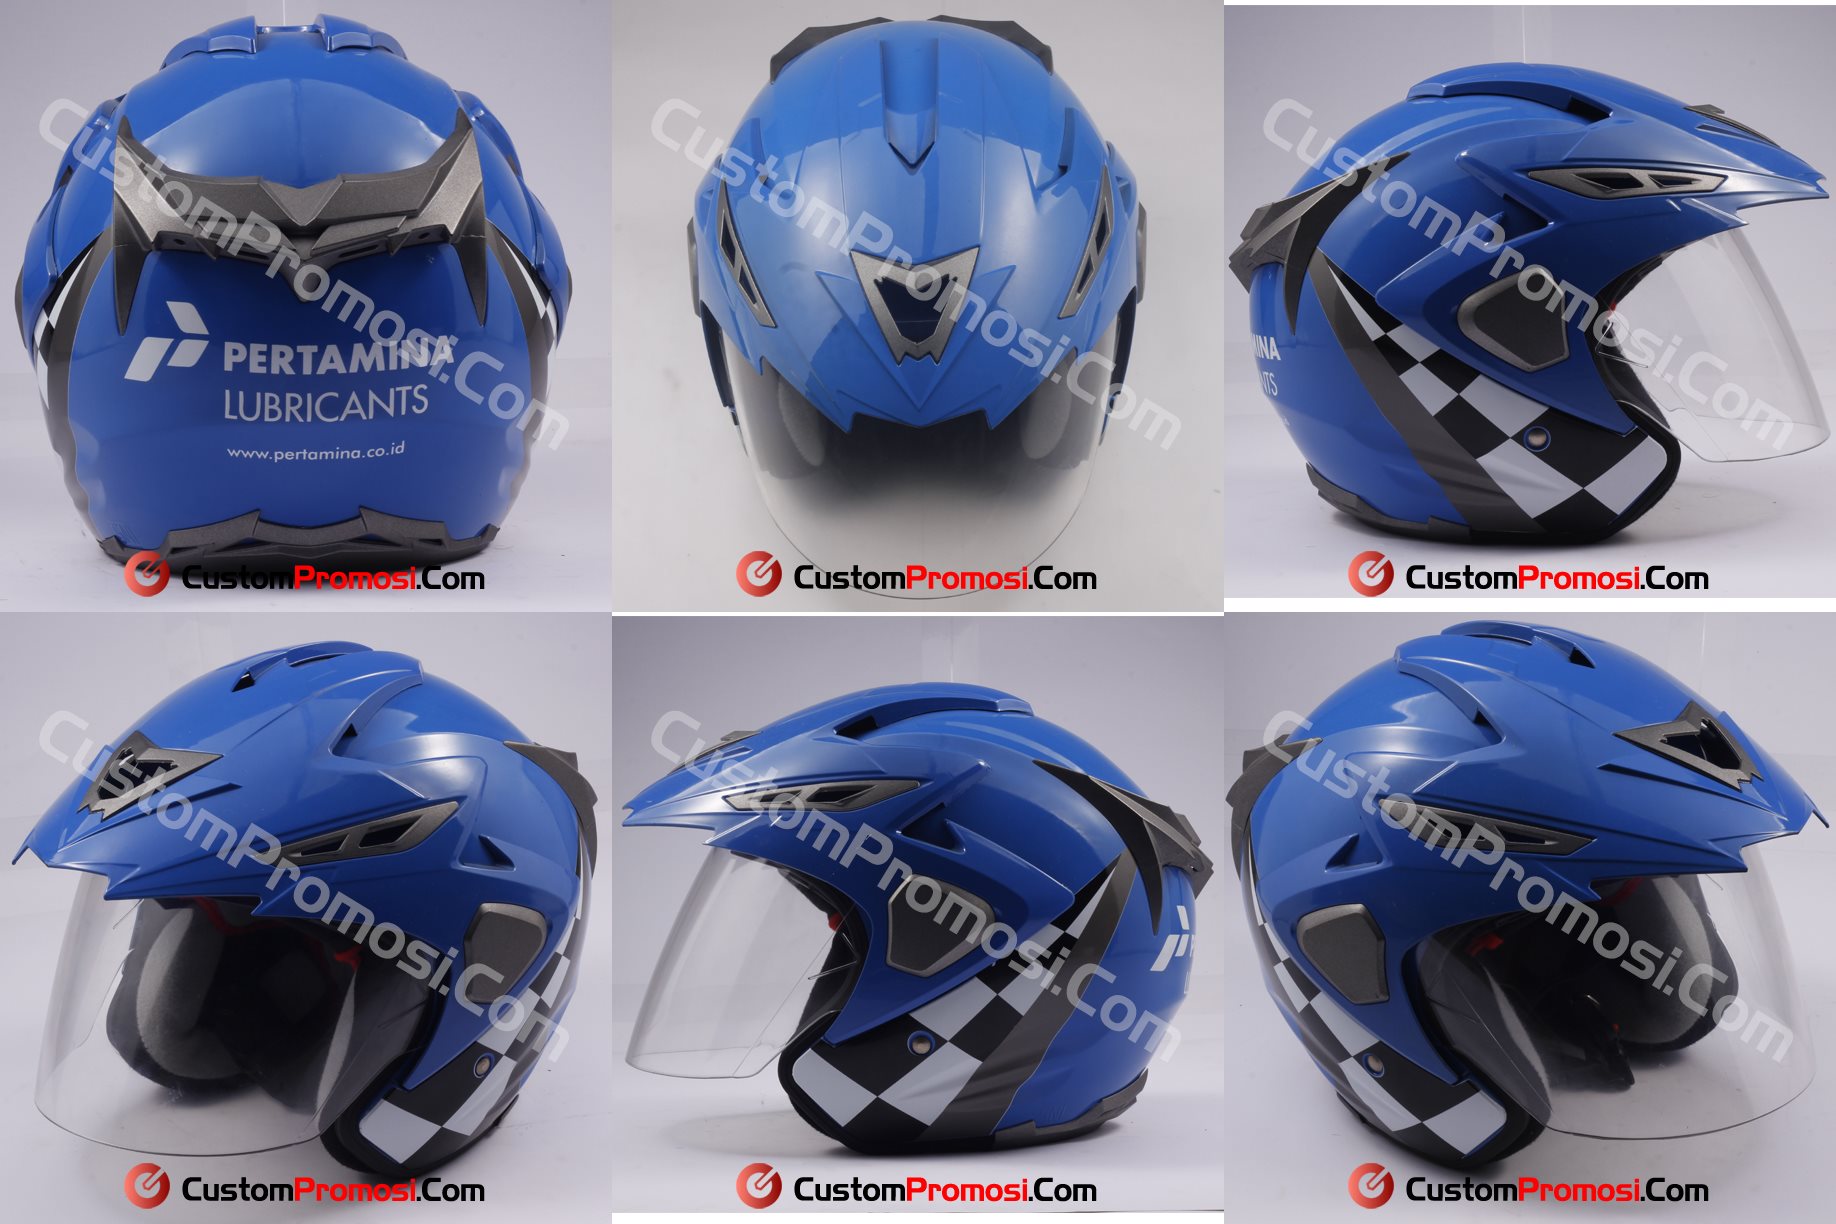 Helm Custom pertamina lubricant